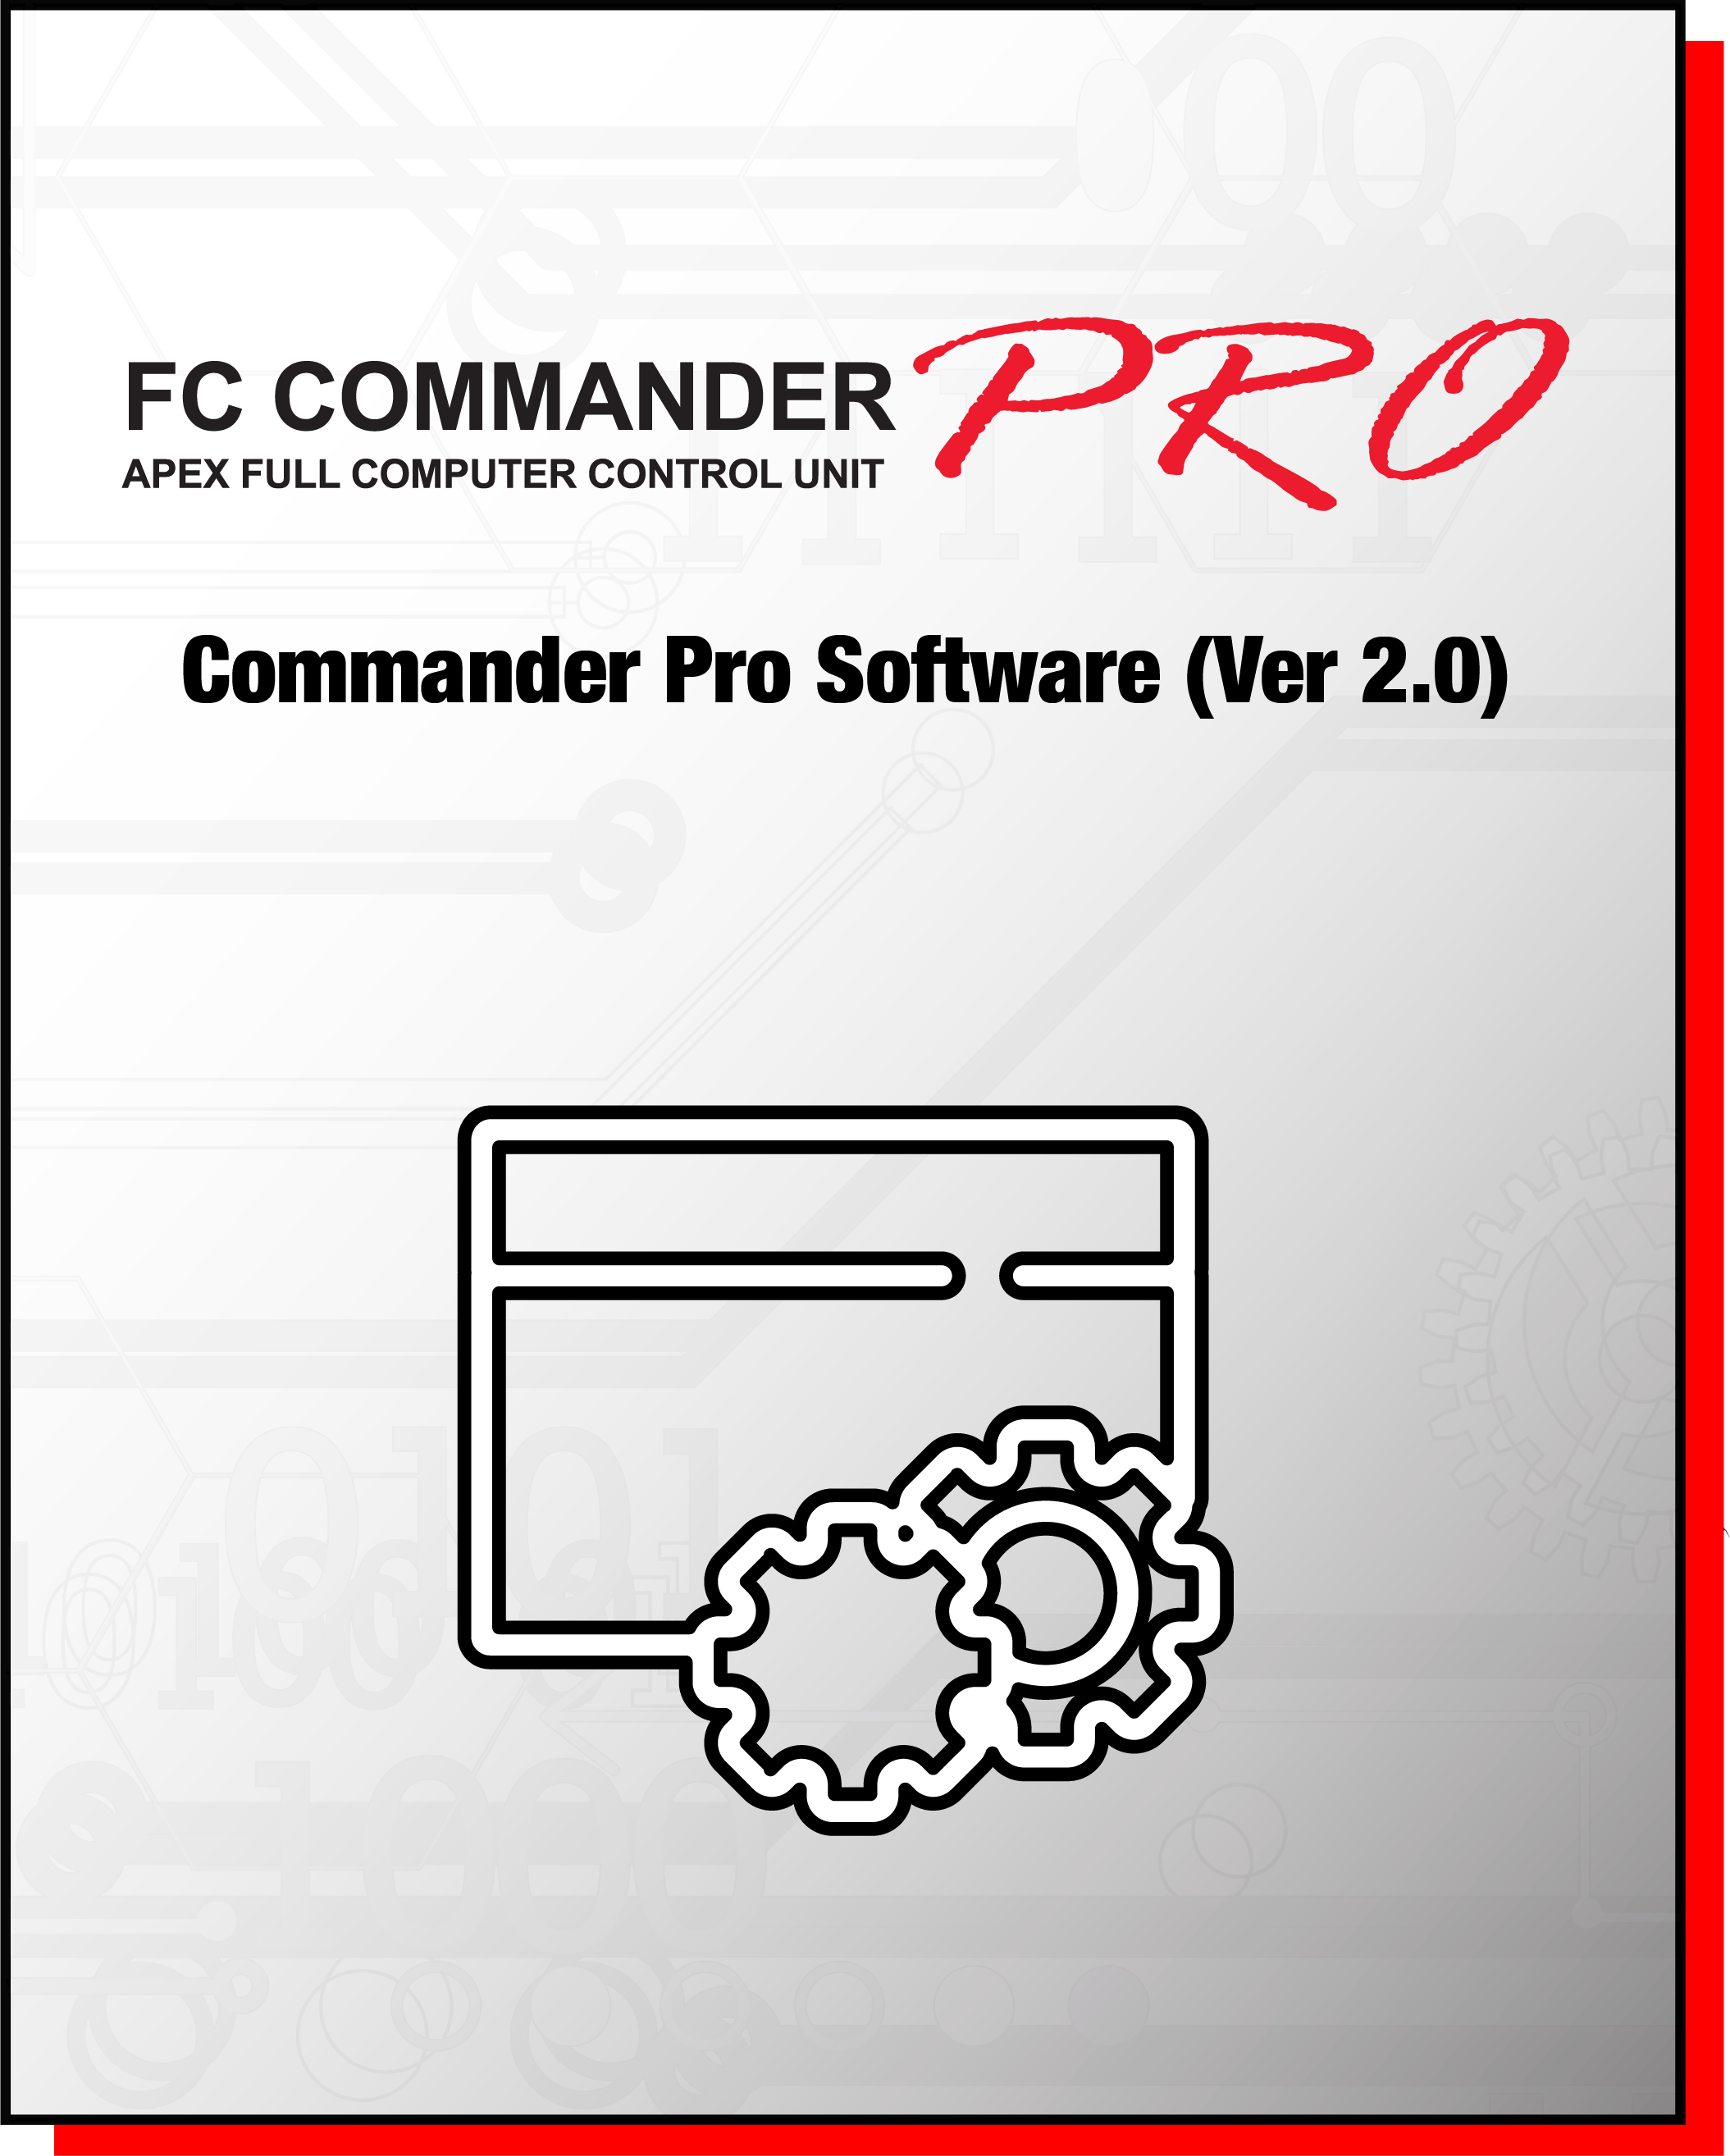 A'PEXi Power FC - FC Commander Pro Software (Ver 2.0)